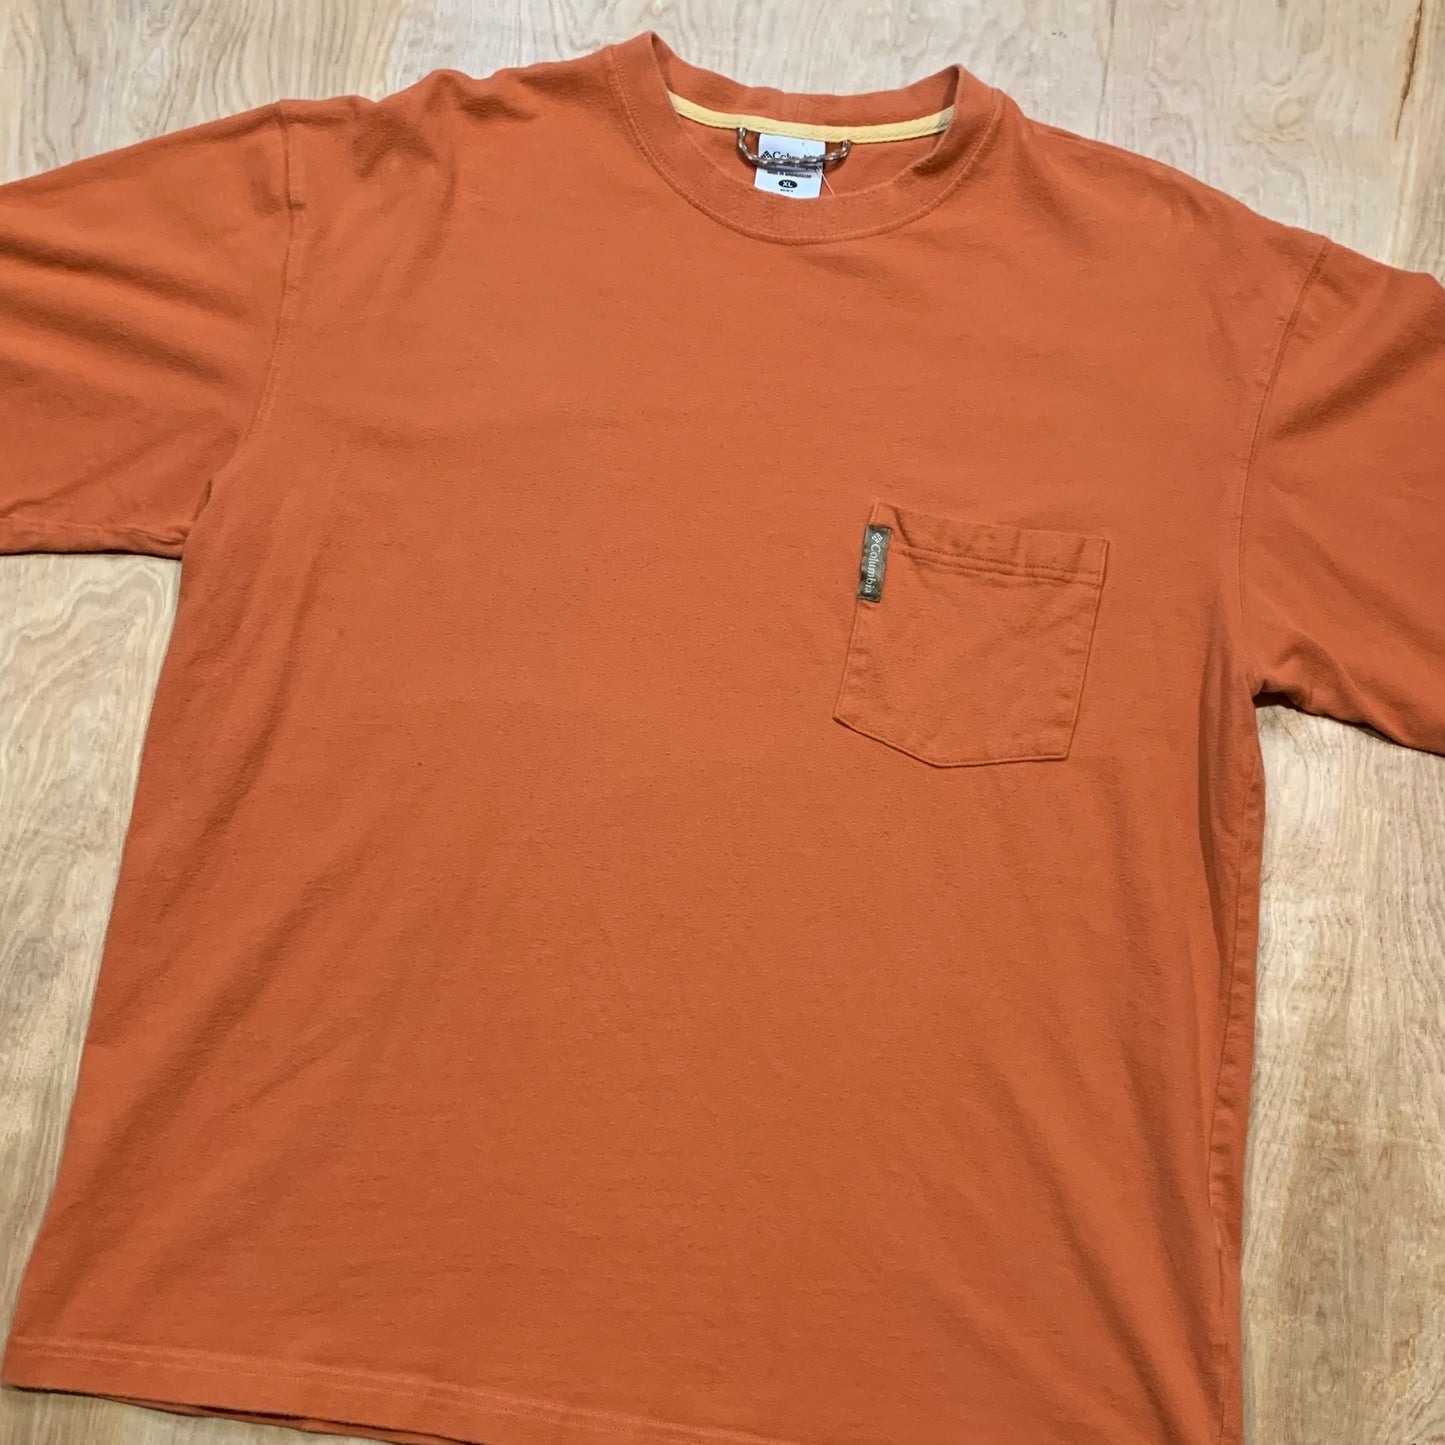 Classic Orange Columbia T-Shirt